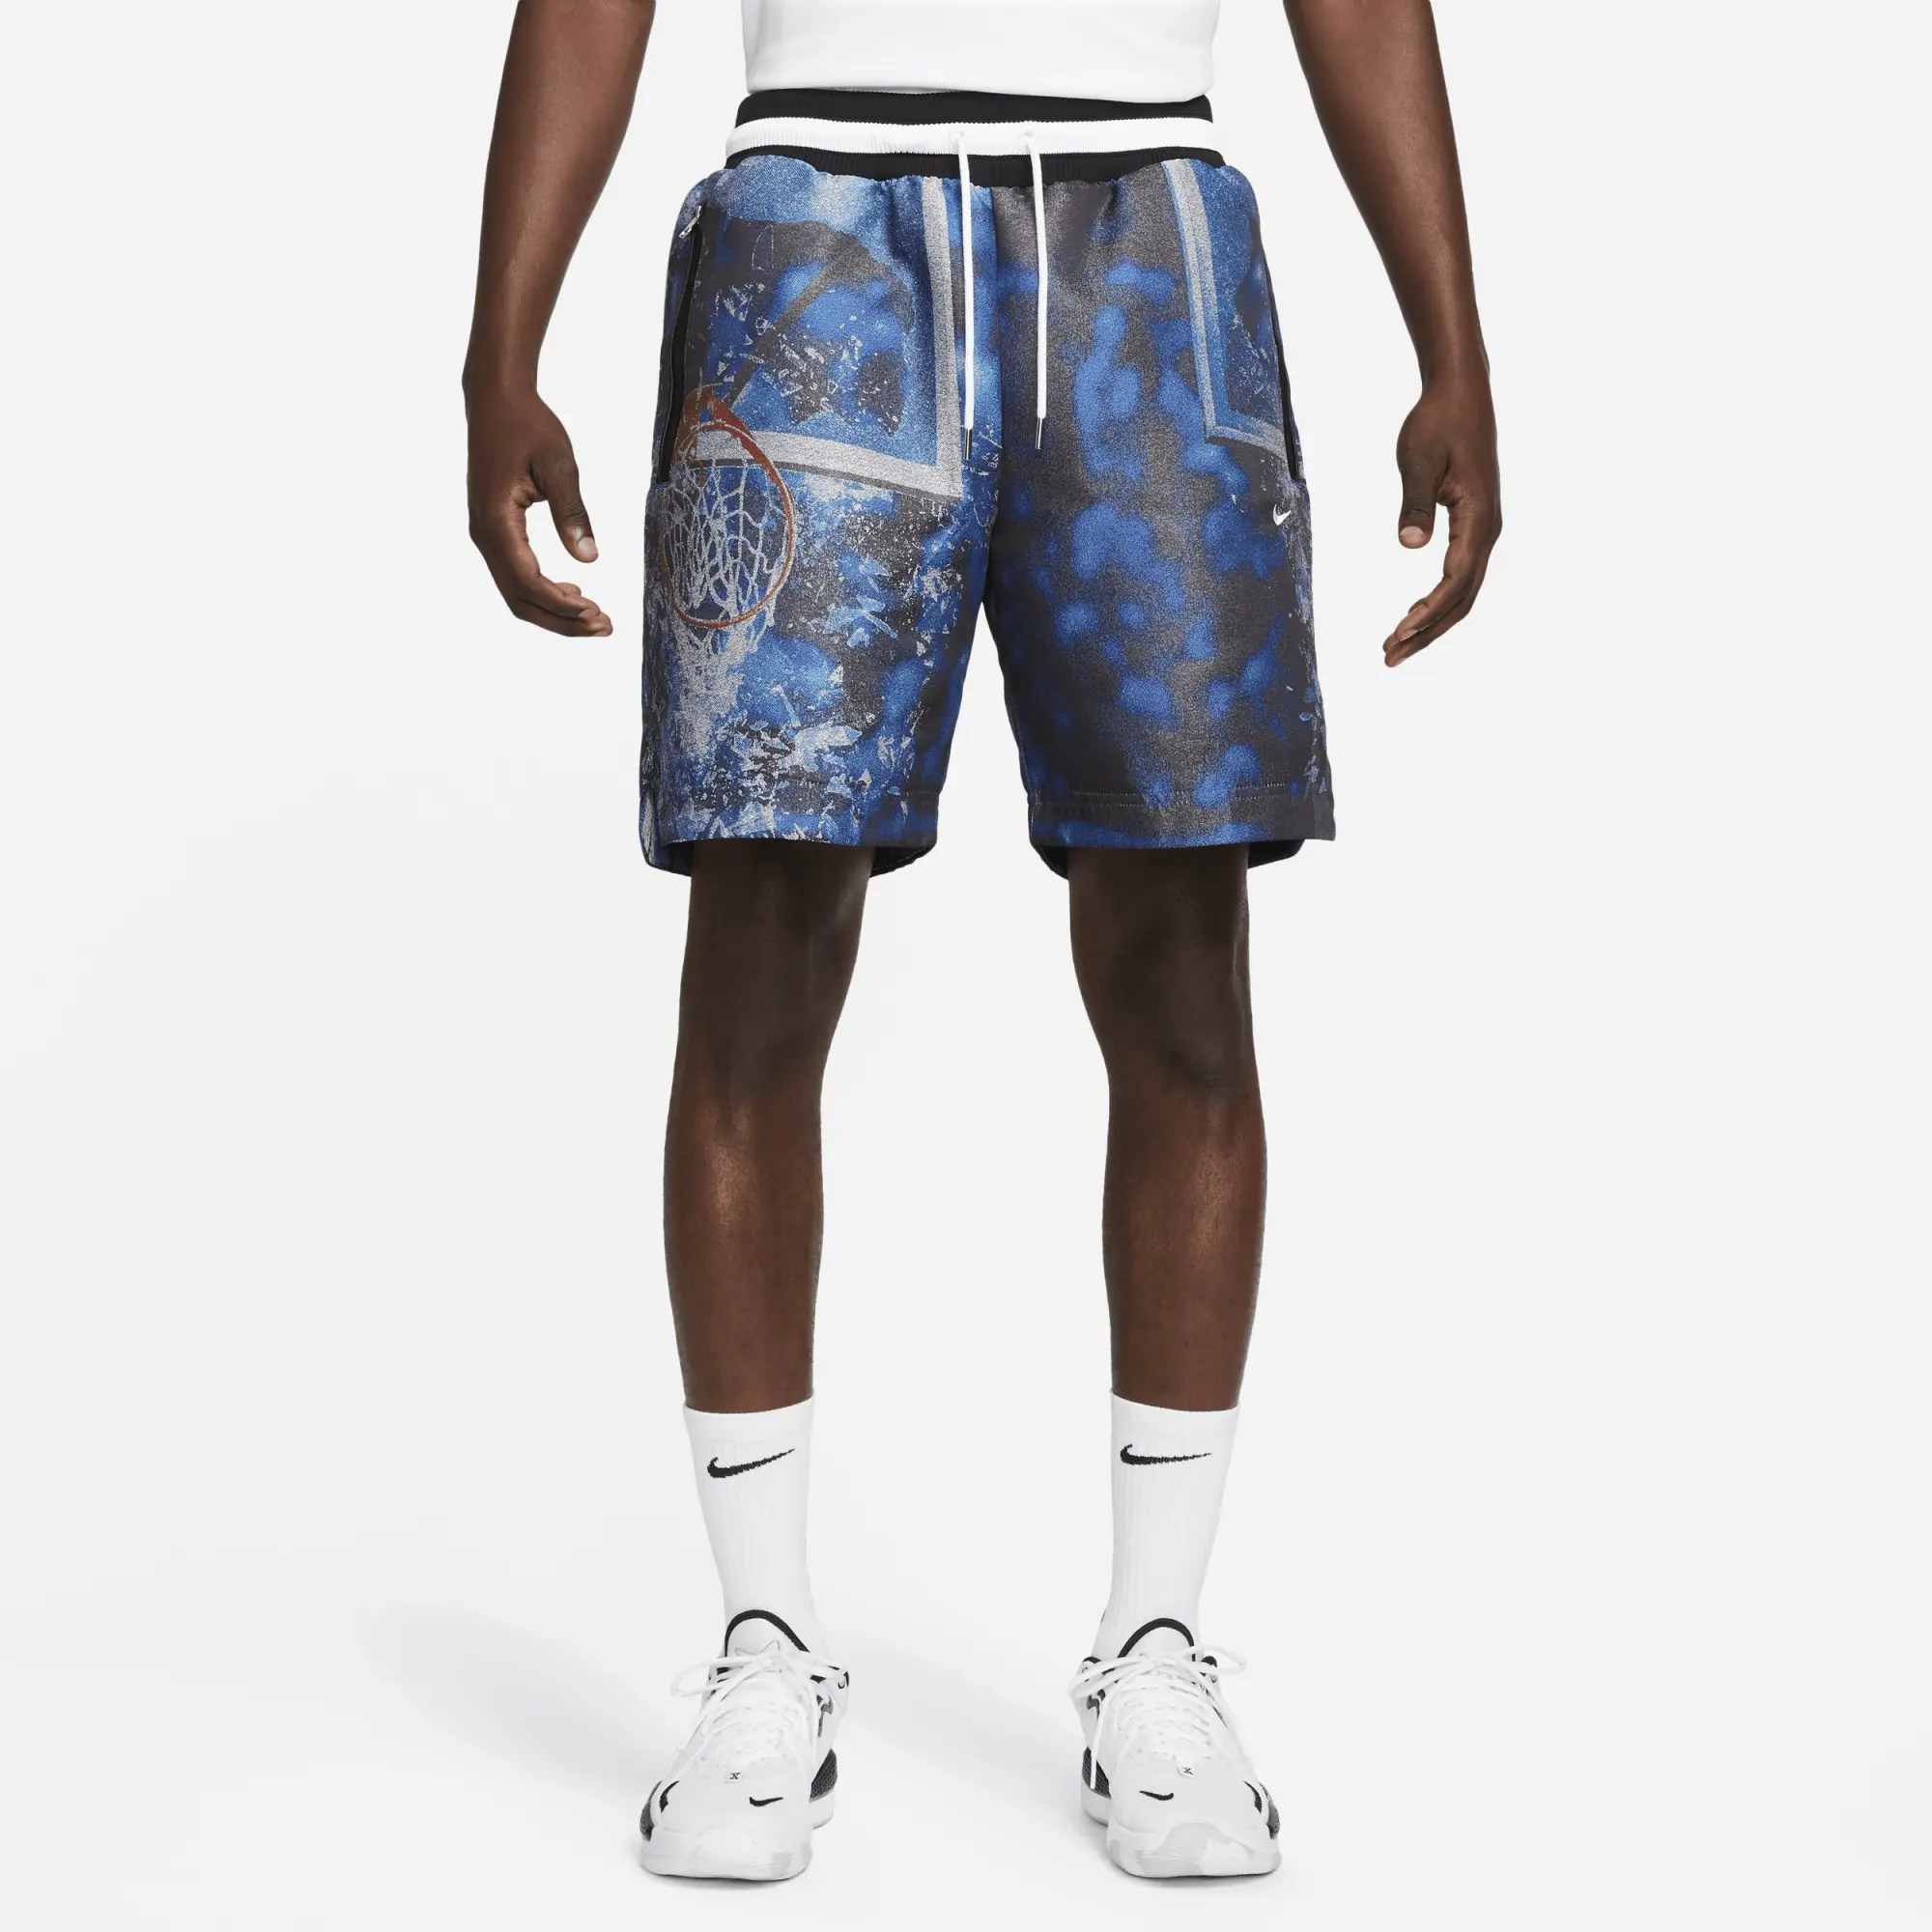 Nike DNA Men's 20cm (approx.) Basketball Shorts - Blue